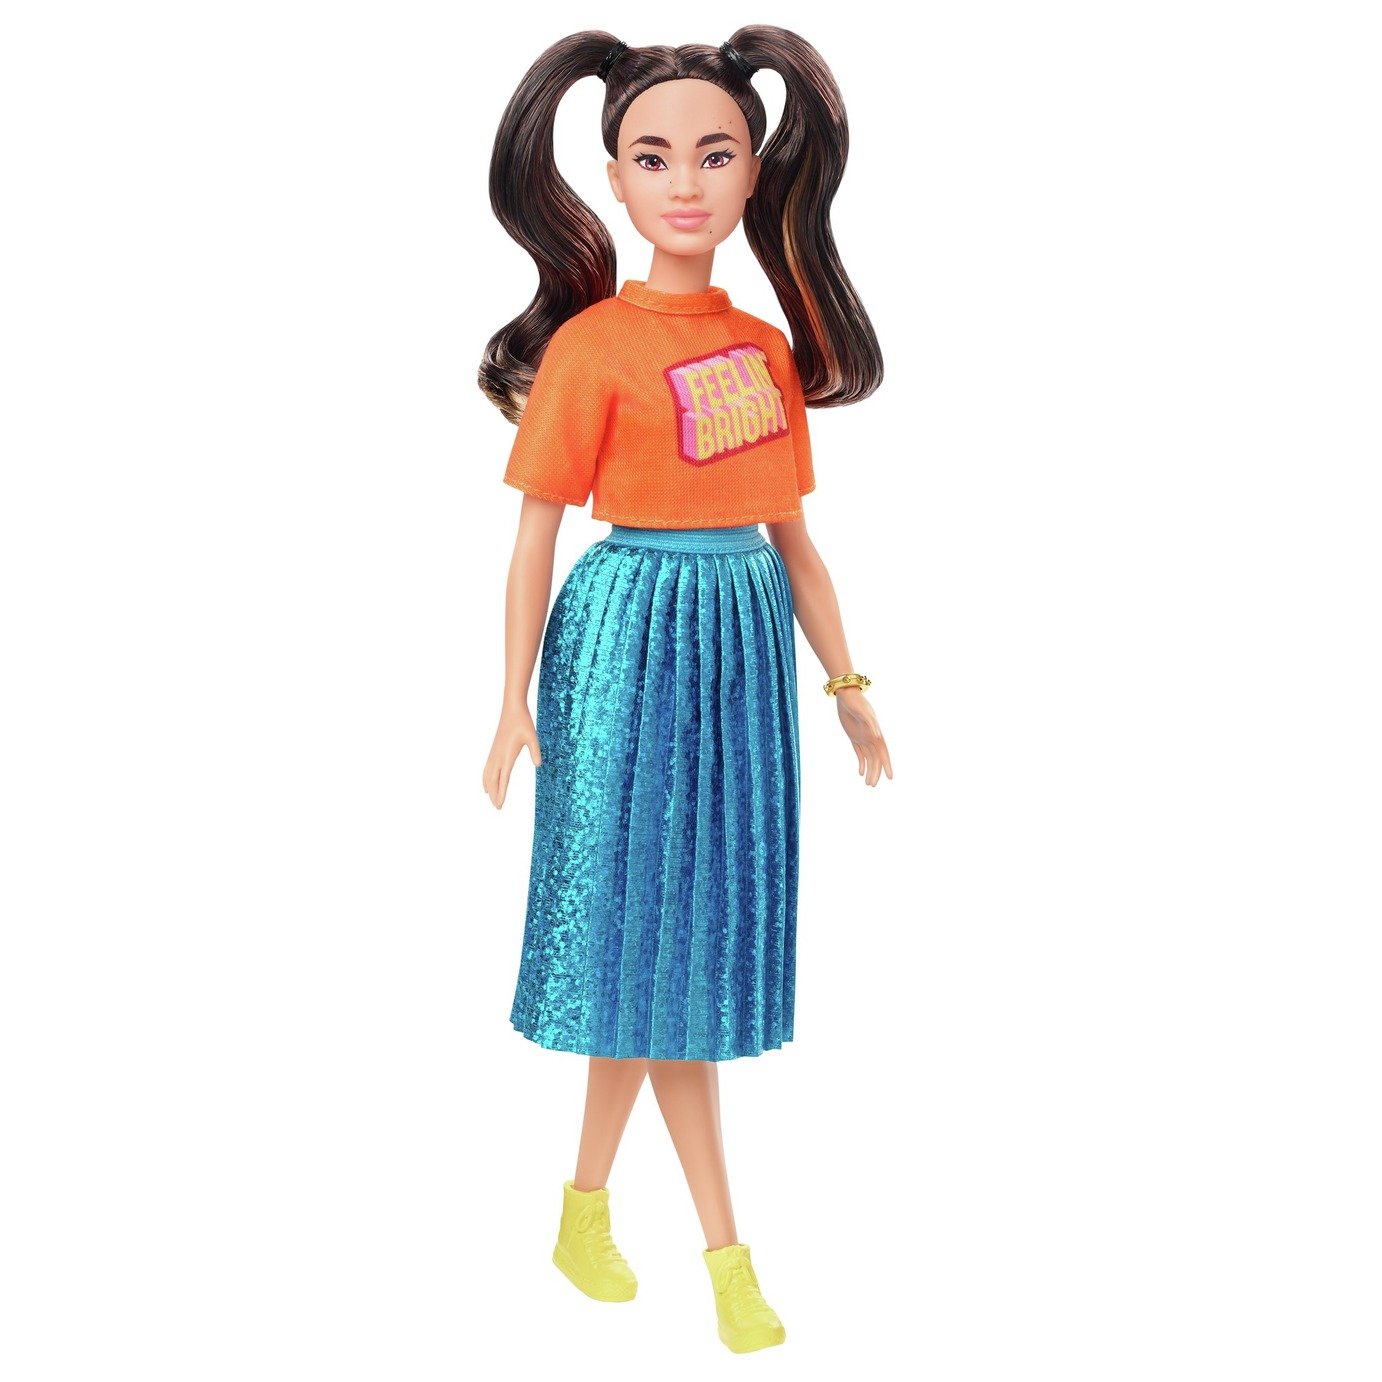 Barbie Fashionista Feelin Bright Doll Review